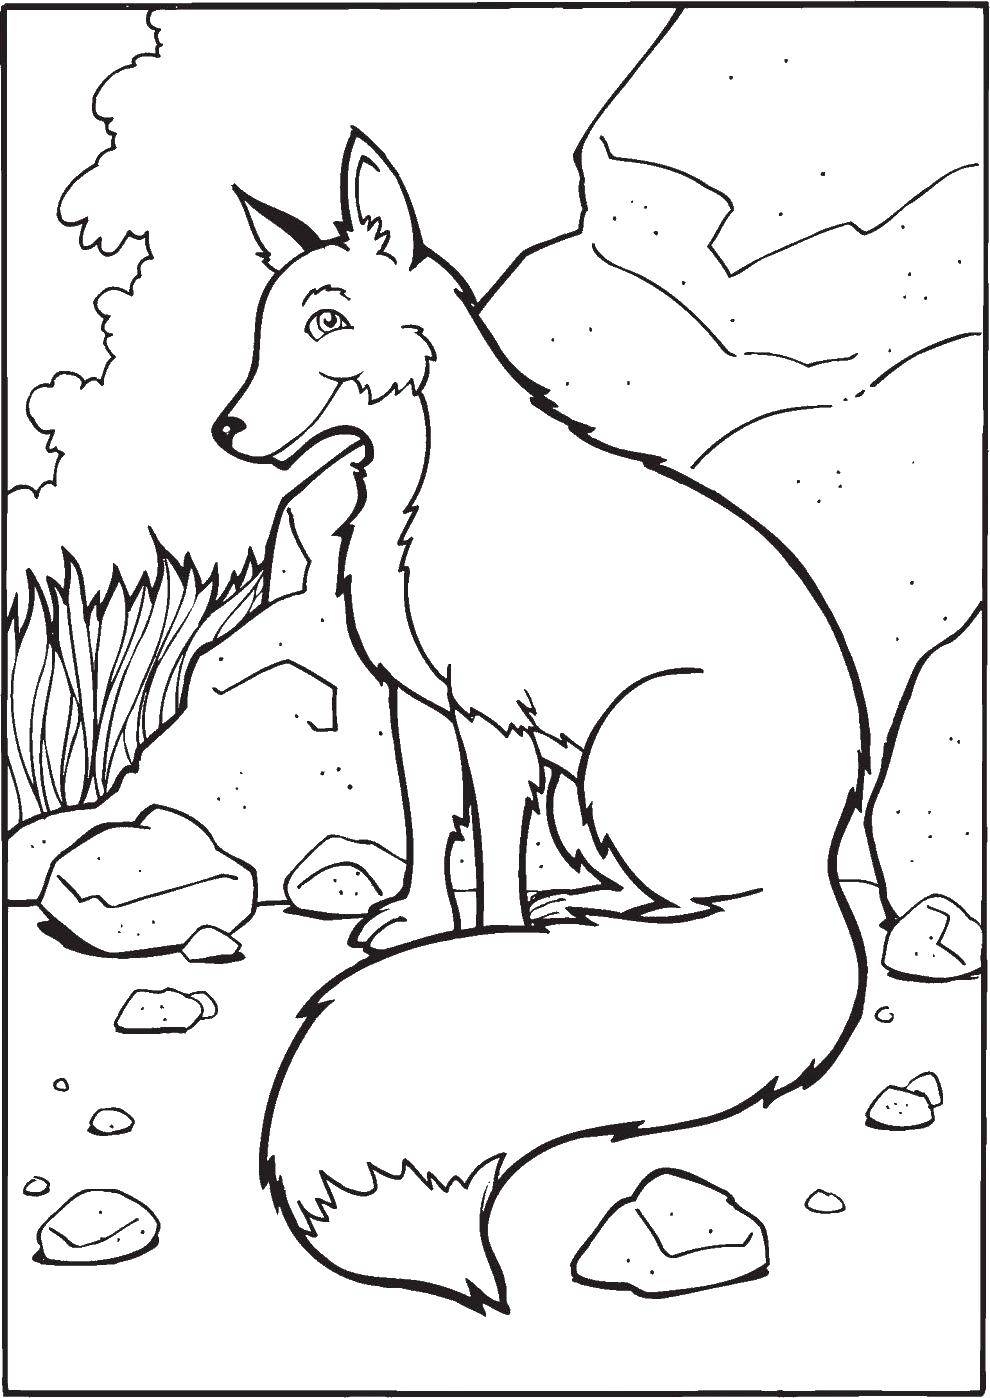 Coloring Cute Fox. Category Fox. Tags:  Animals, Fox.